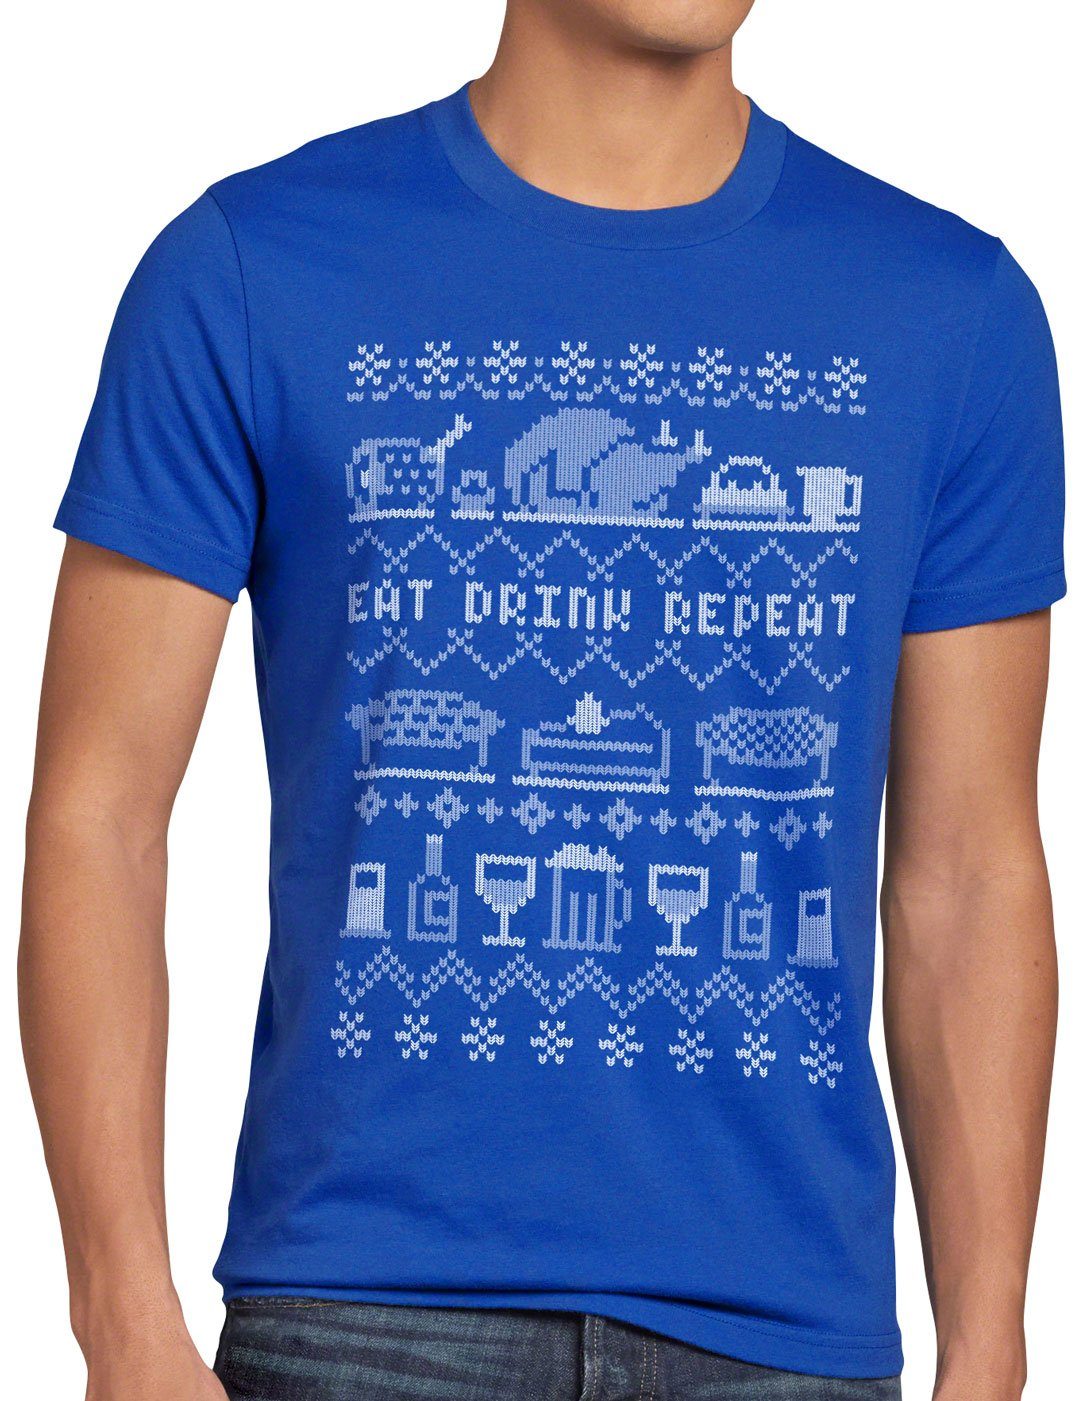 style3 Print-Shirt Herren T-Shirt Eat Drink Repeat Ugly Sweater weihnachtsessen fressen feiertage x-mas pulli blau